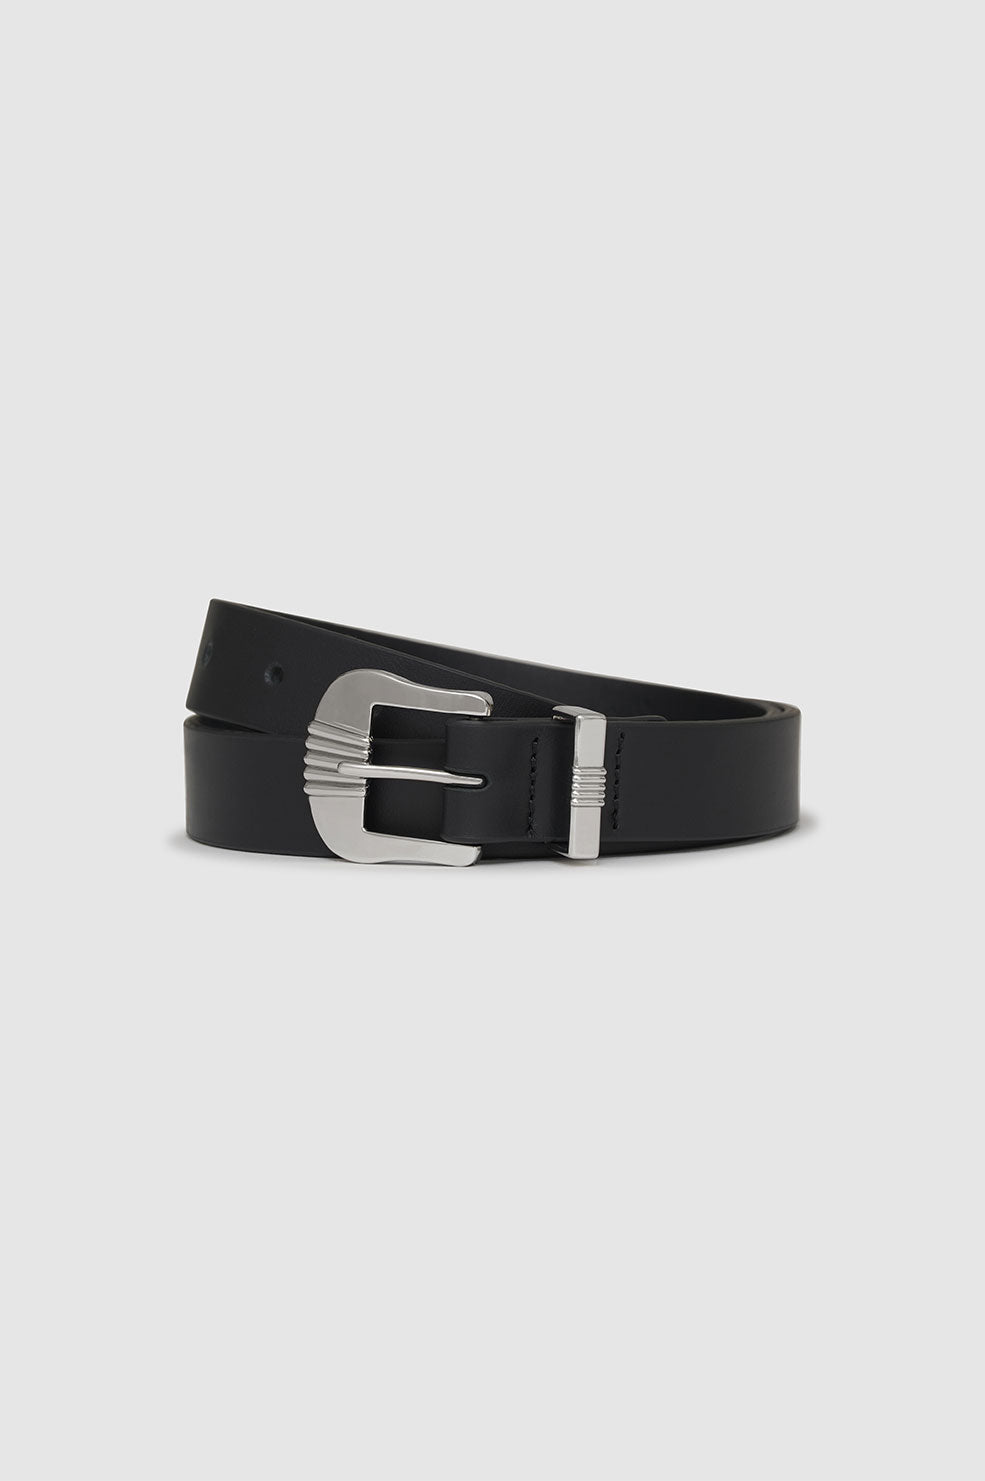 ANINE BING Waylon Belt - Black And Silver - Wrapped View